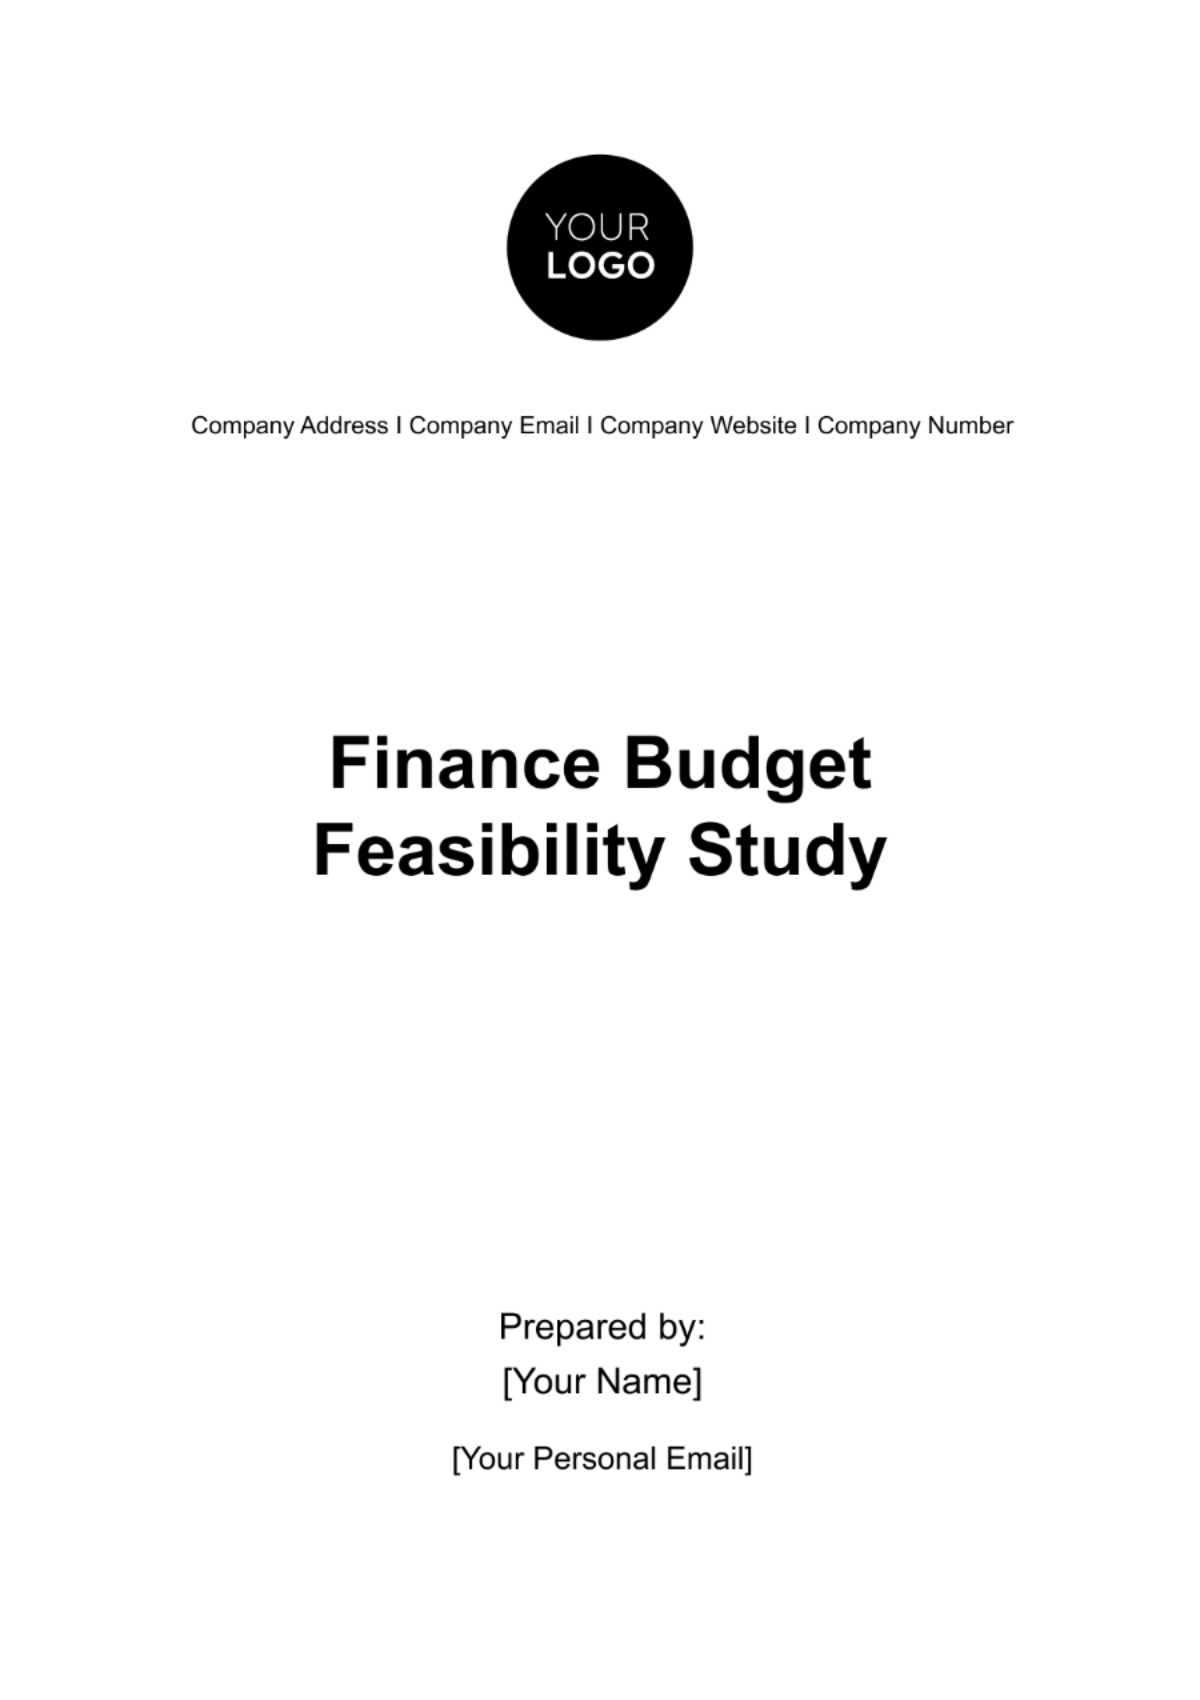 Finance Budget Feasibility Study Template